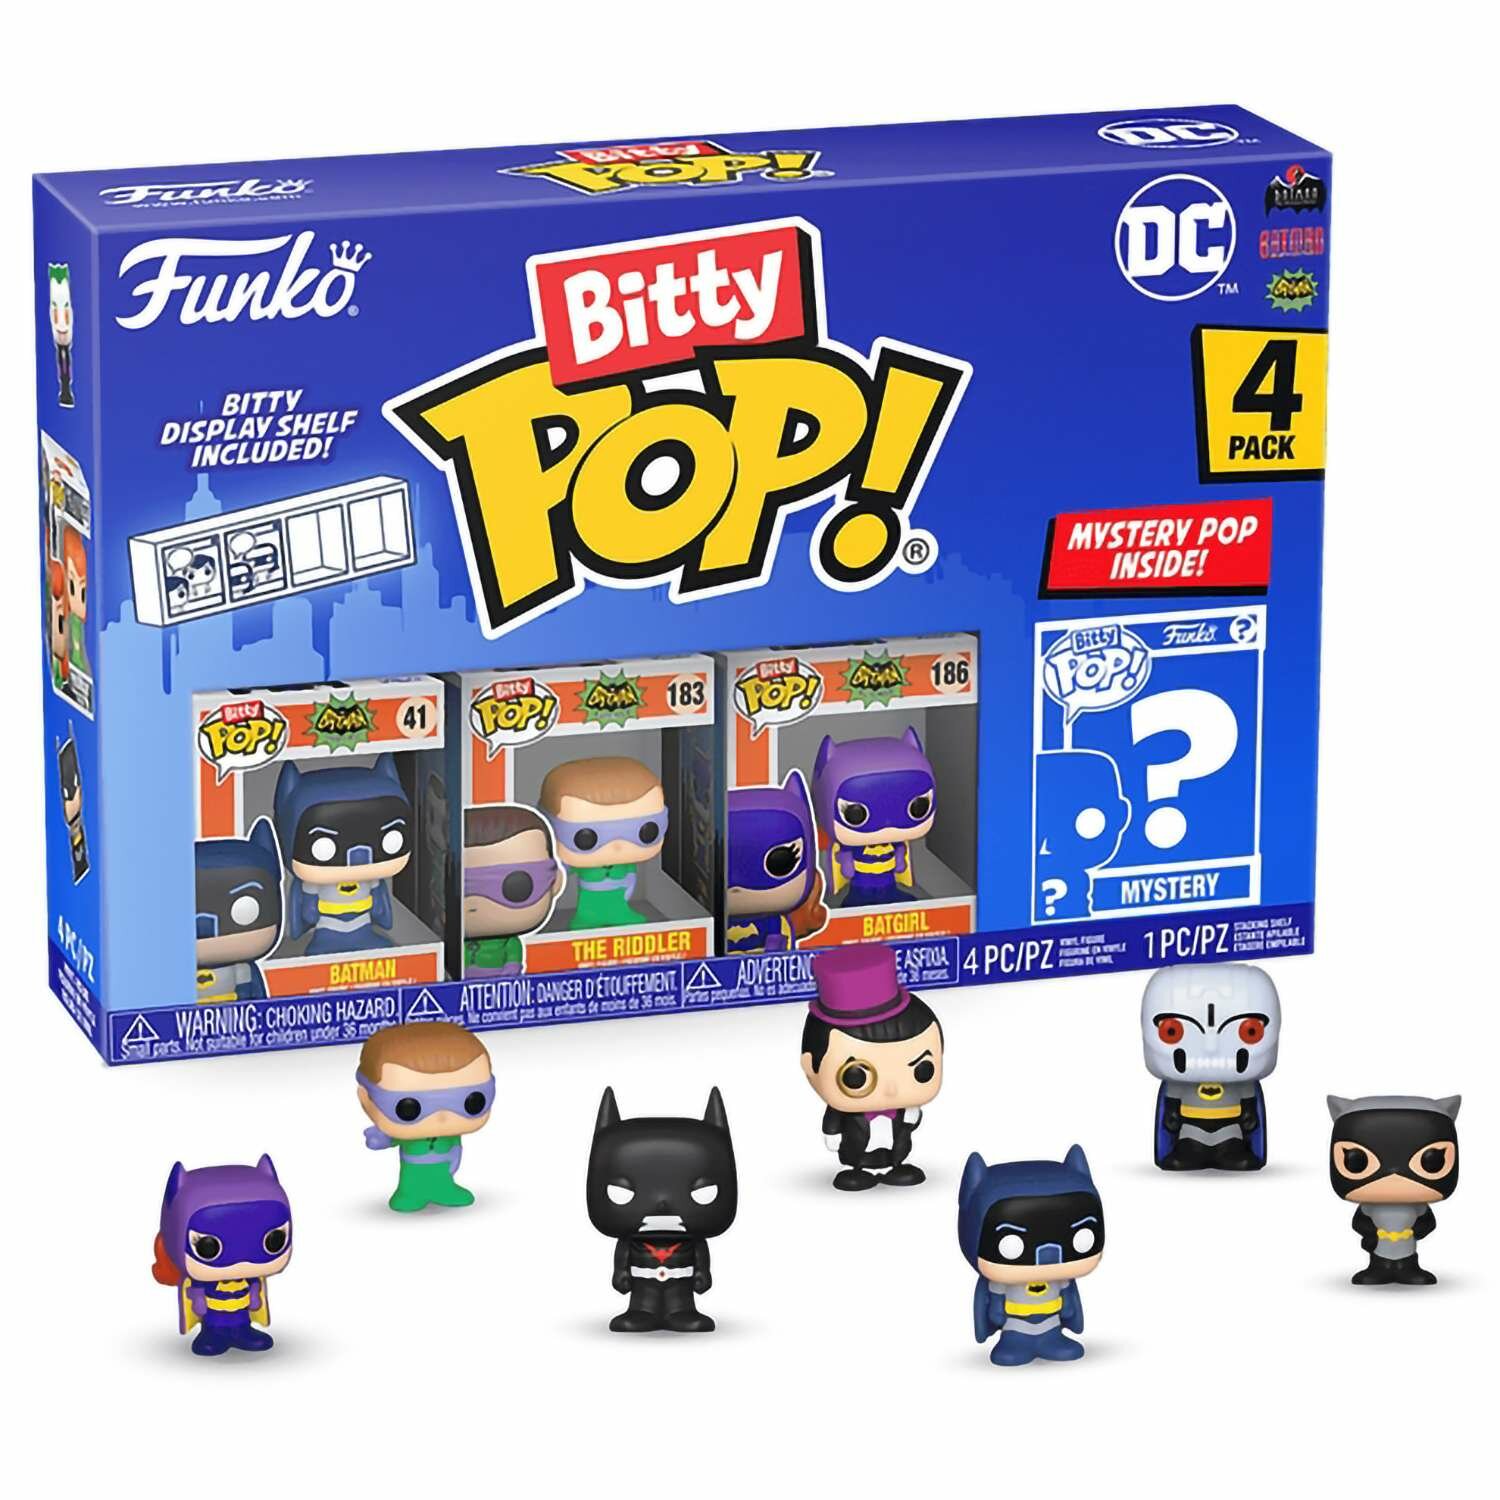 Фигурки Funko Bitty POP! DC Comics S4 Batman+The Riddler+Batgirl+Mystery (1 of 4) 4PK 71314